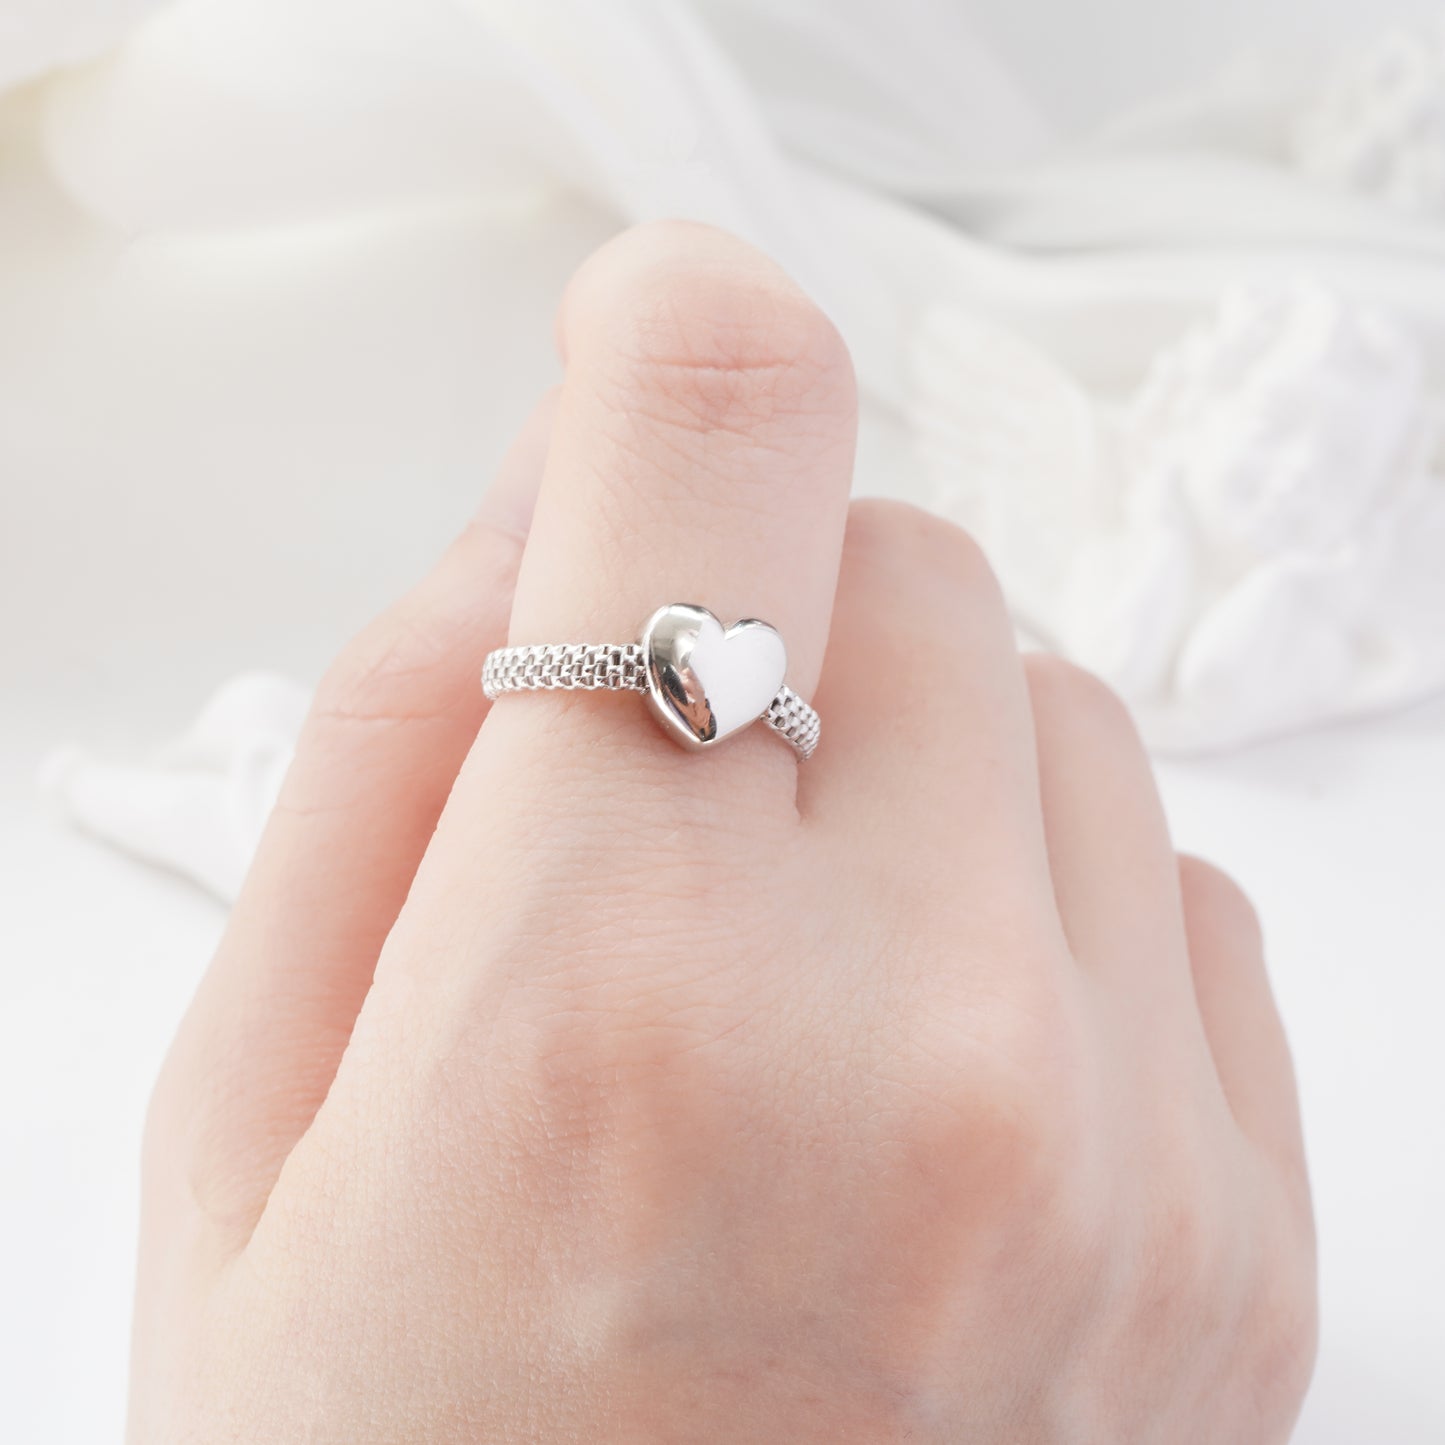 Chain love ring丨925 silver